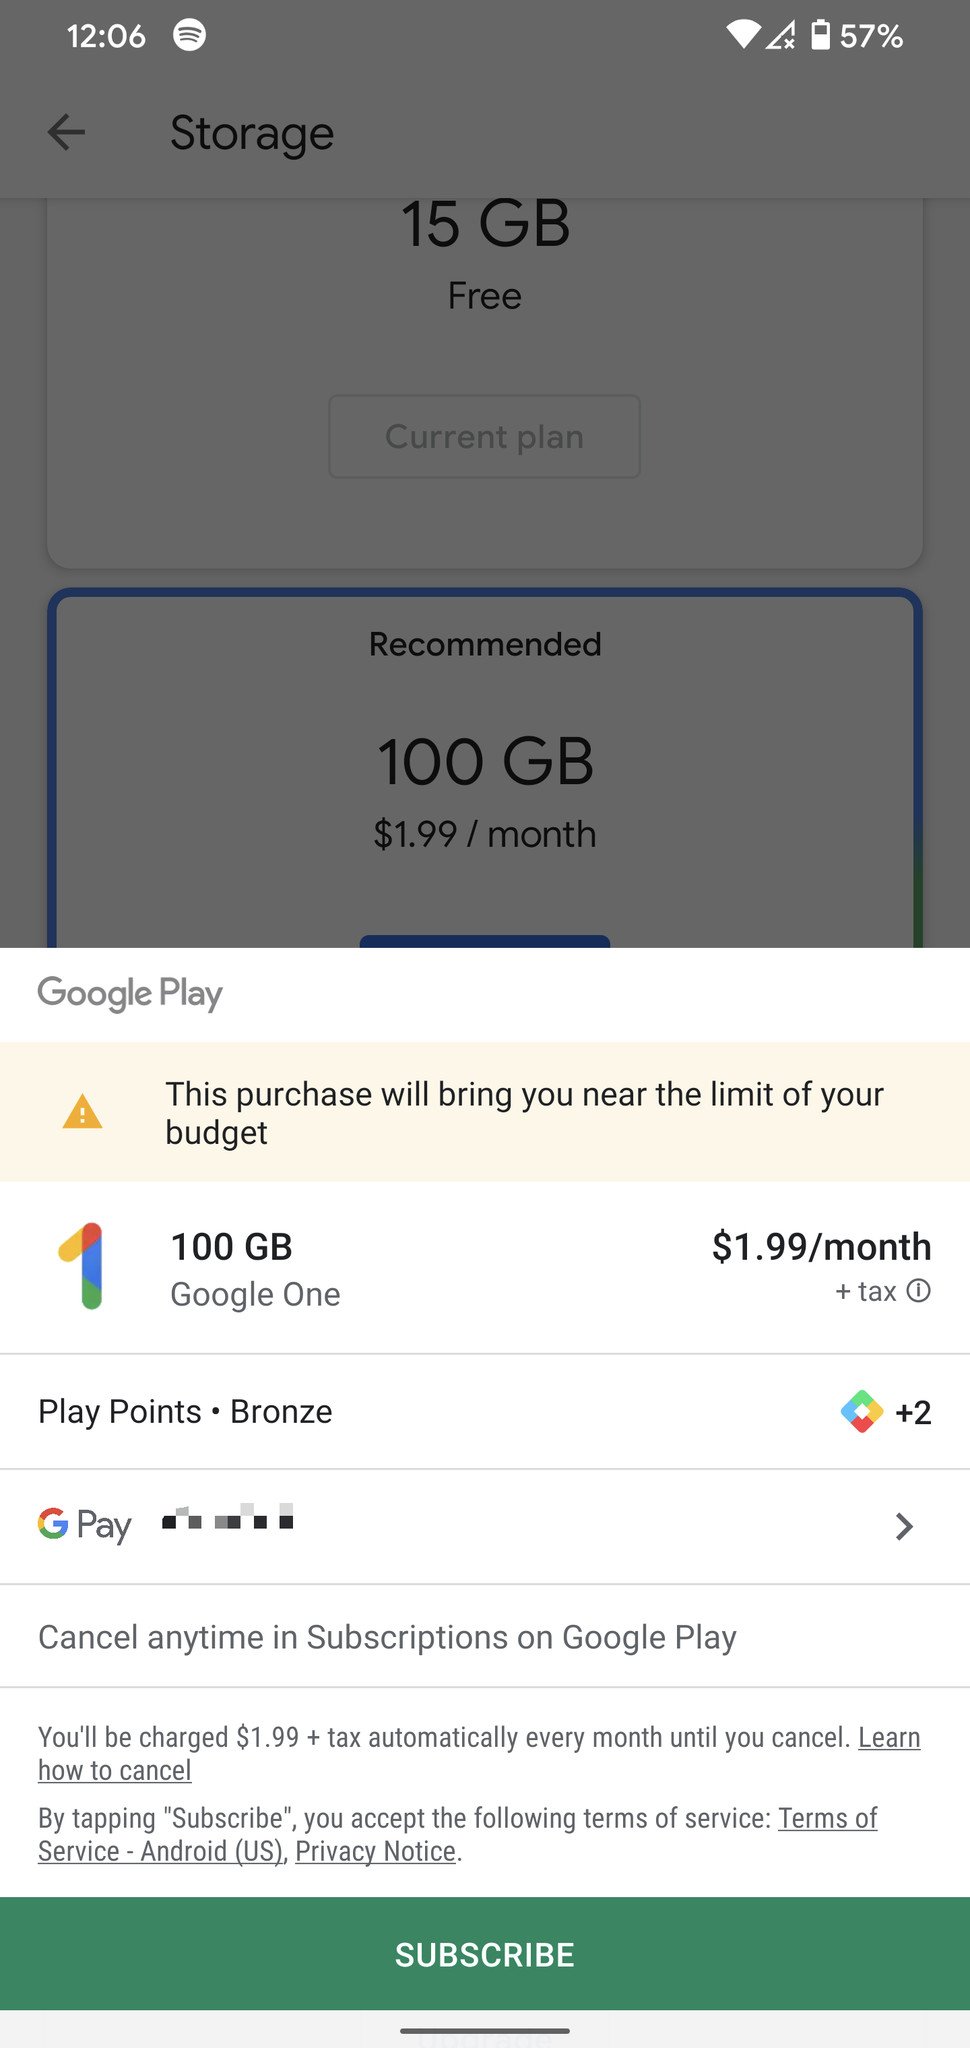 How To Buy Google Drive Storage